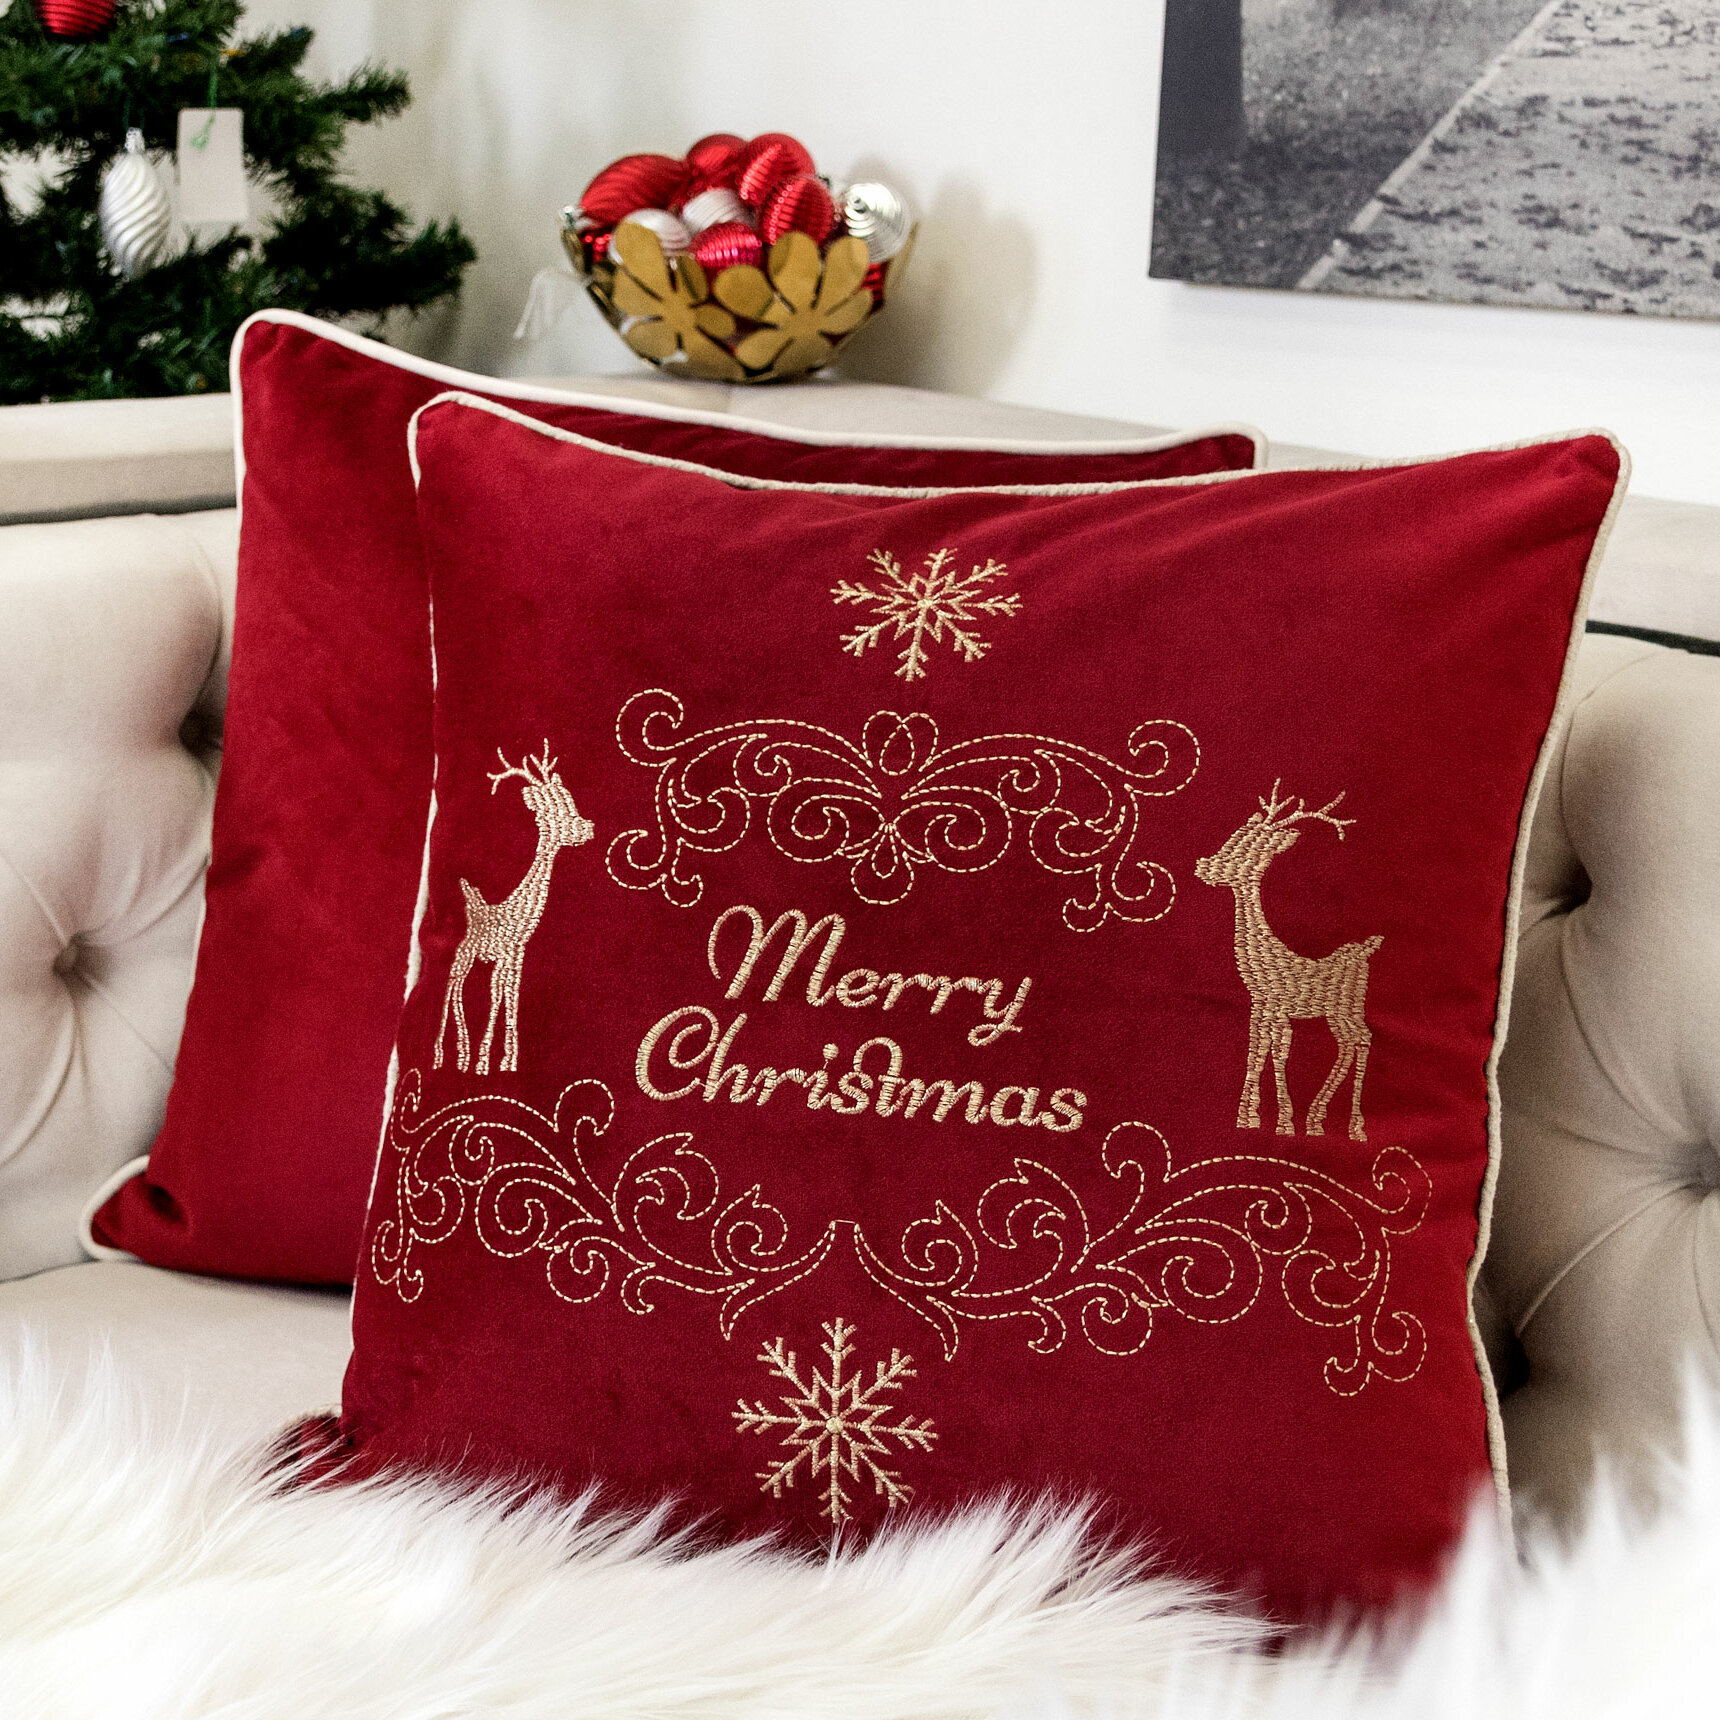 Christmas throw pillows